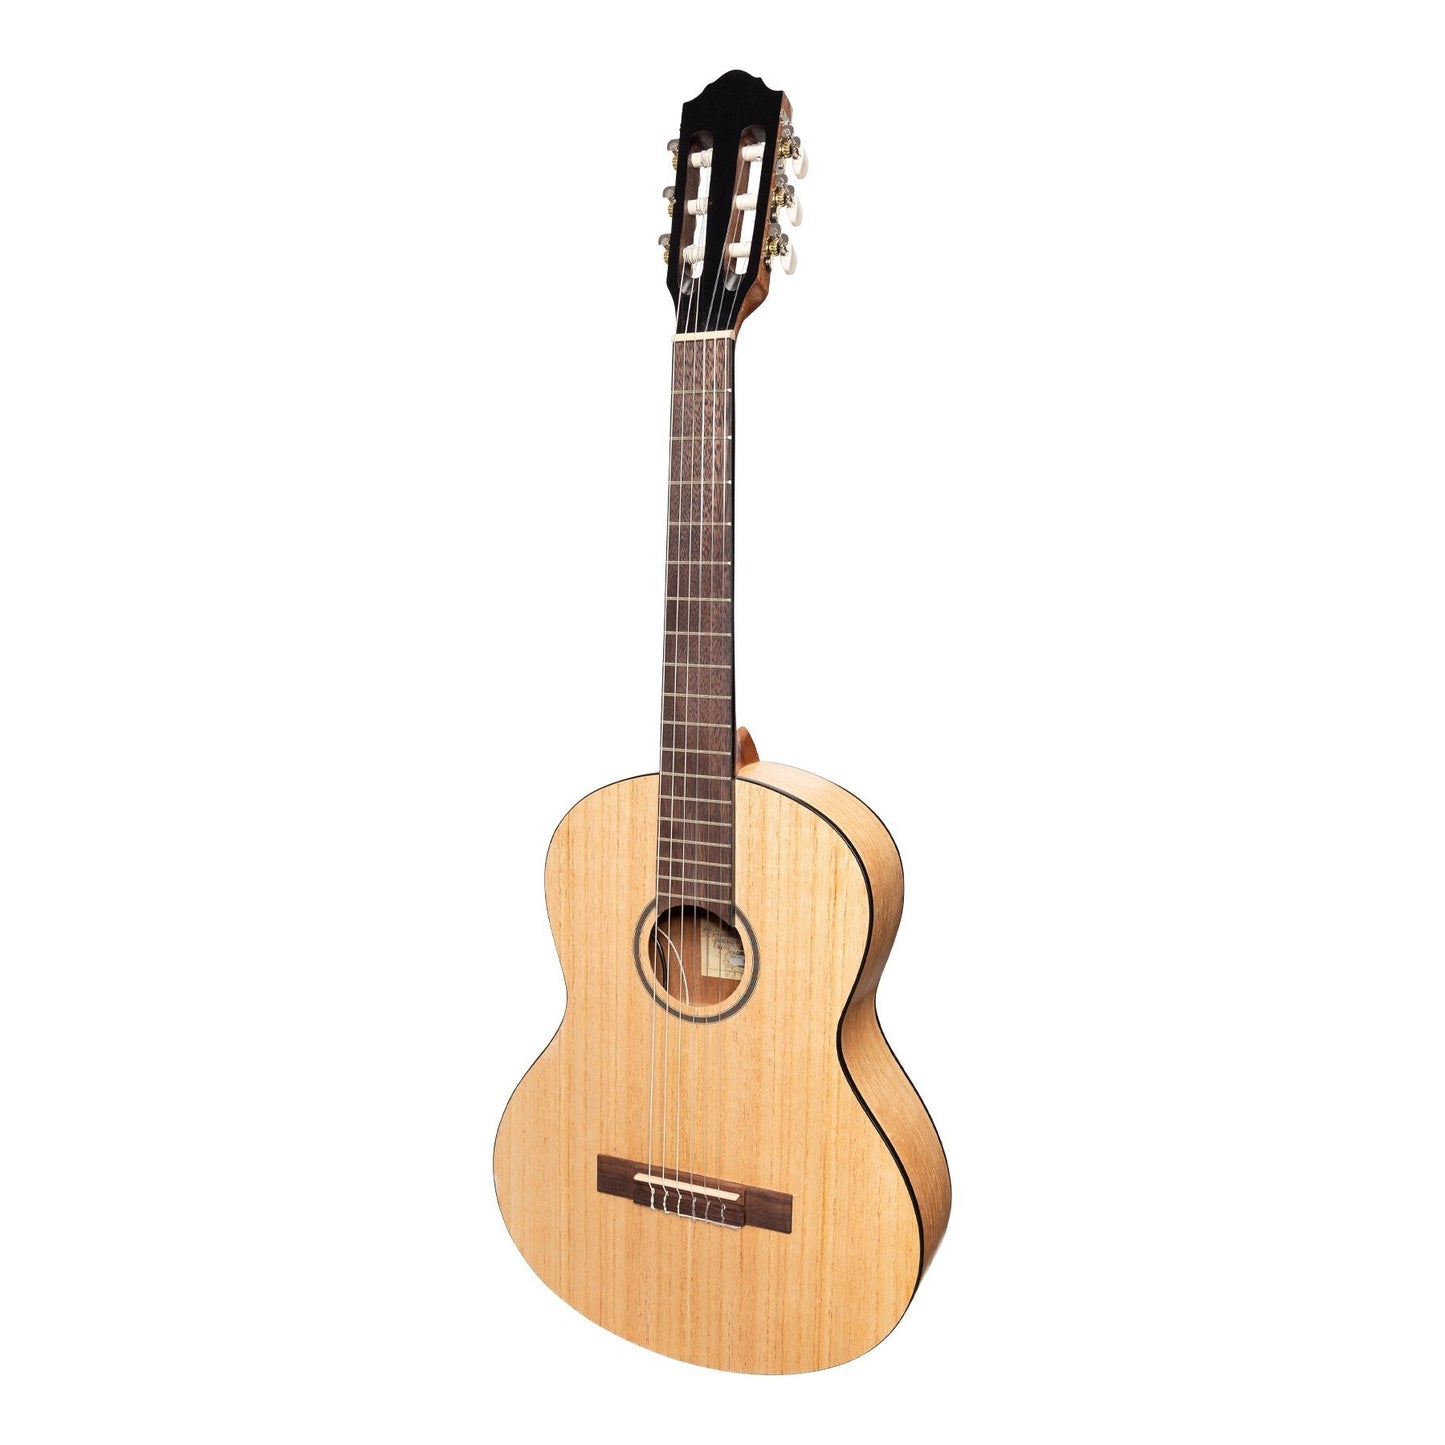 Martinez 'Slim Jim' 3/4 Size Electric Classical Guitar with Pickup/Tuner (Mindi-Wood)